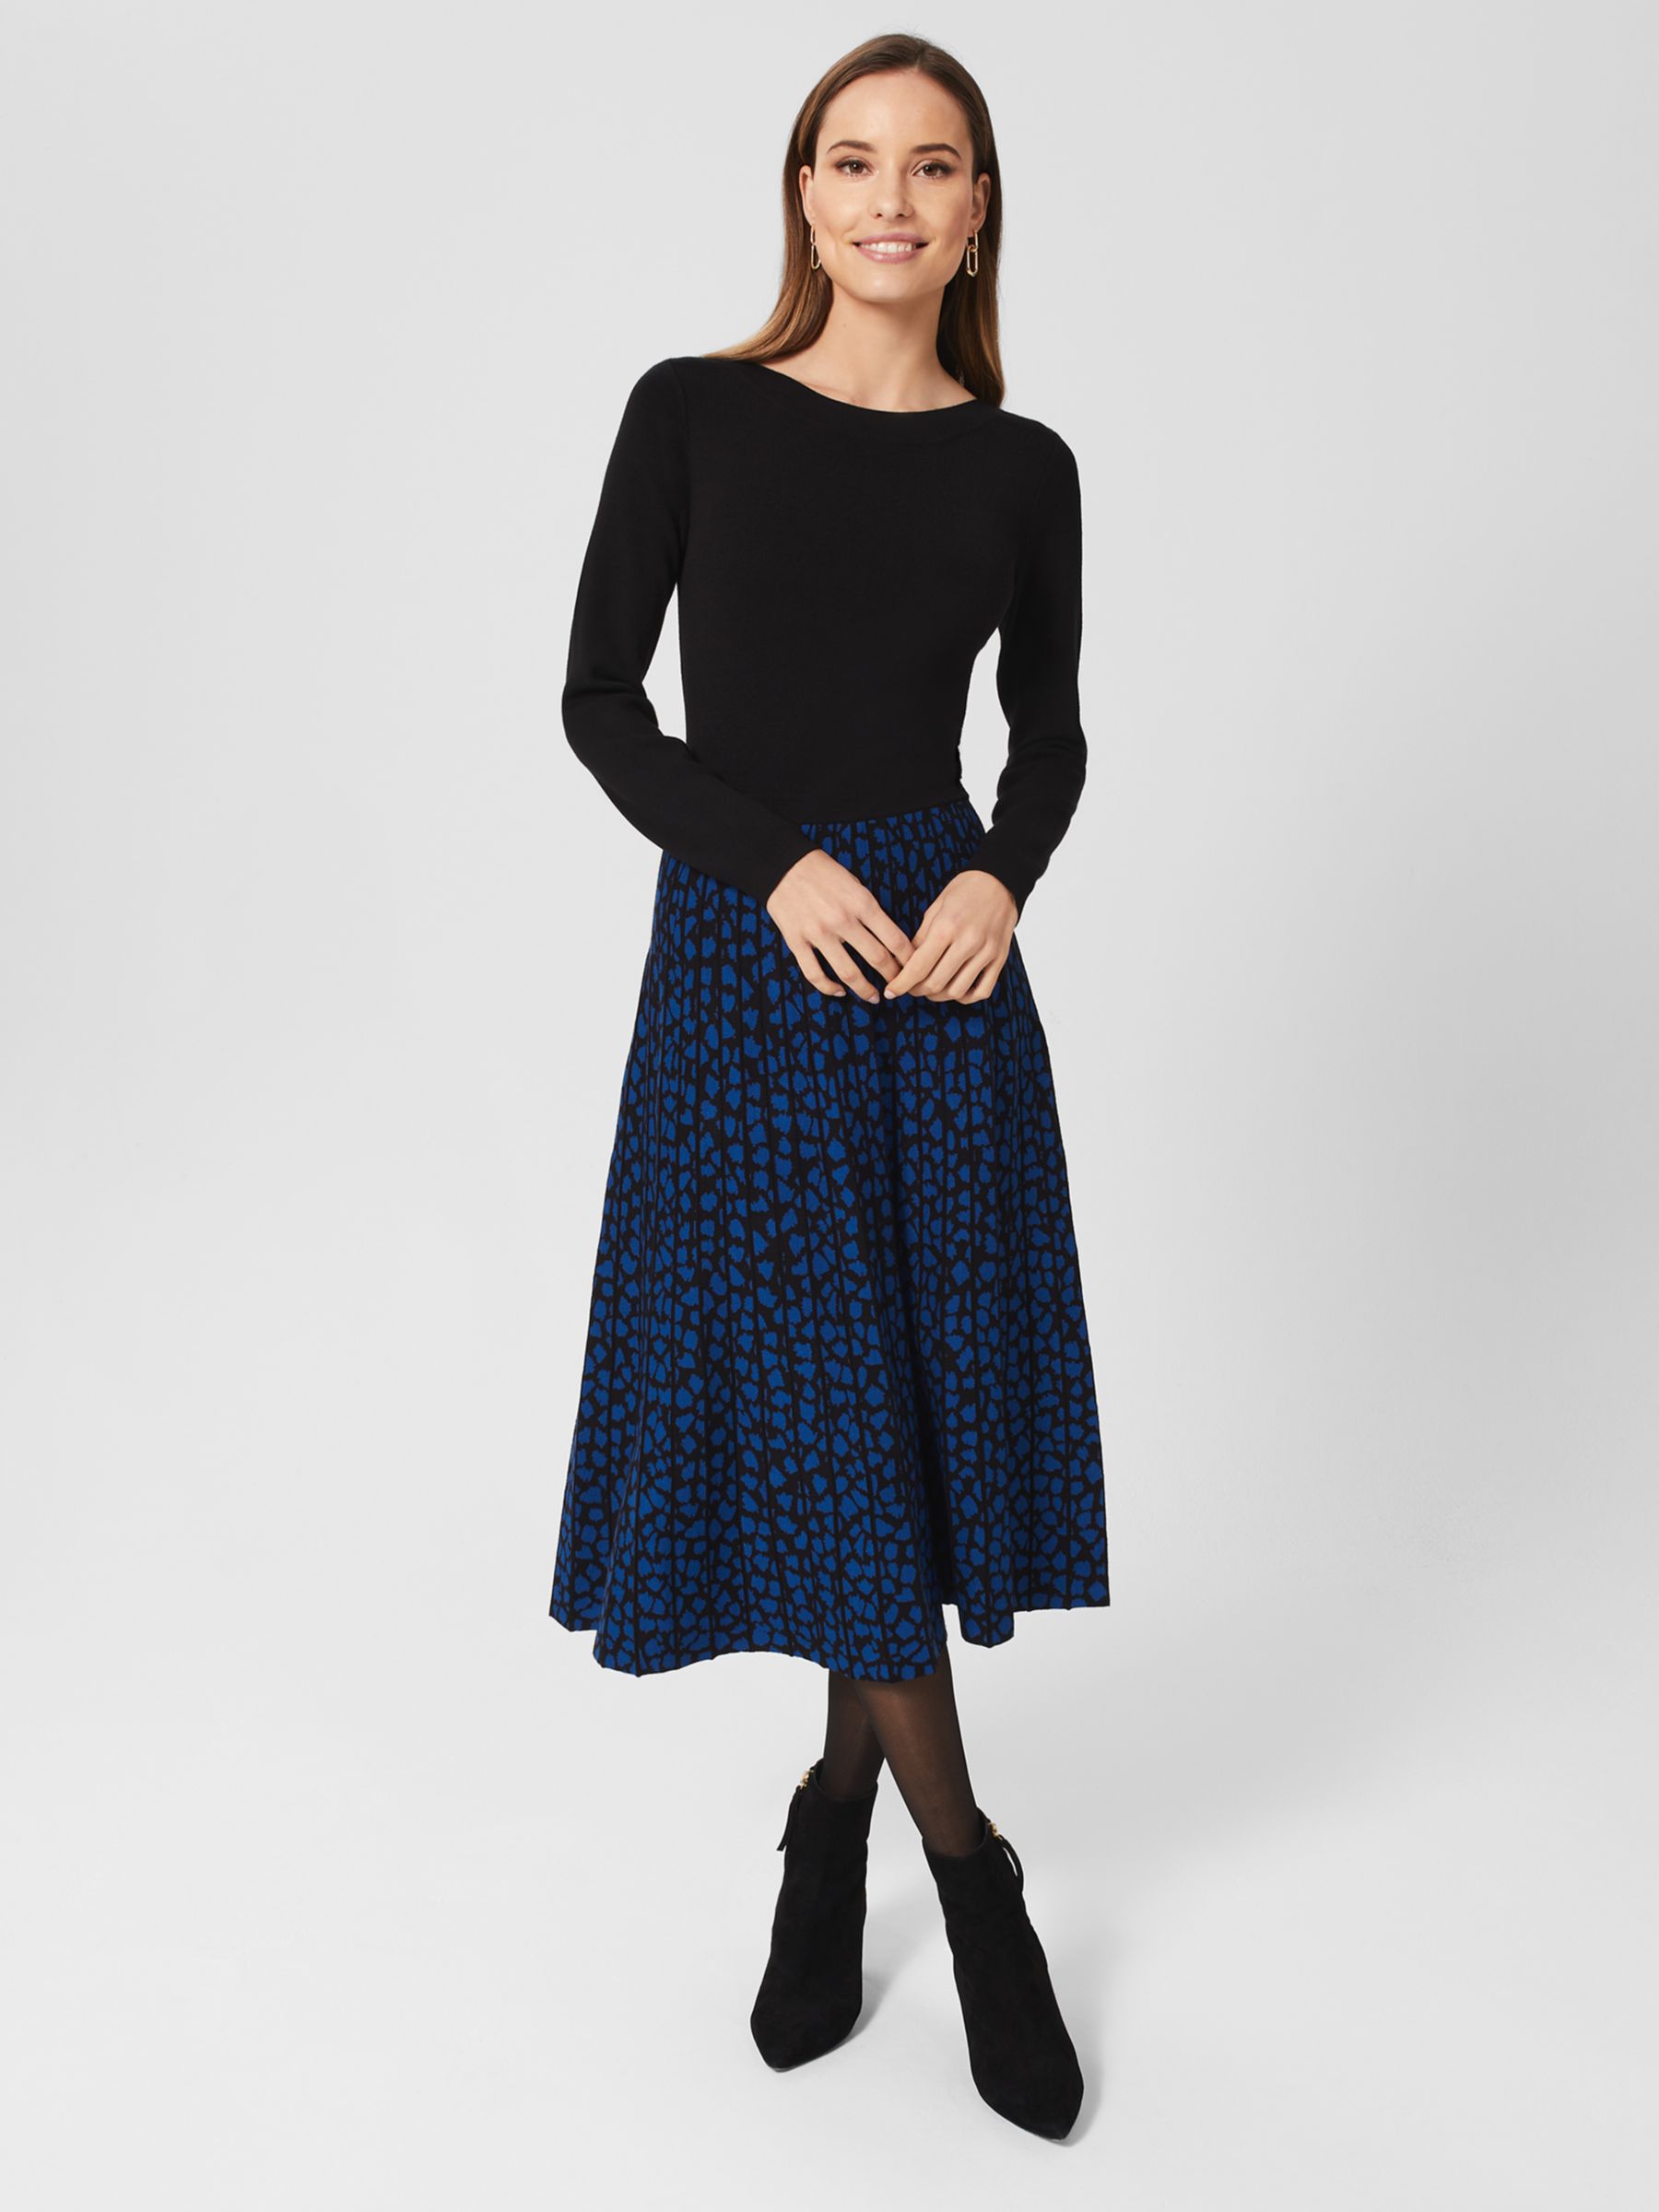 Hobbs Elena Abstract Midi Dress, Black/Blue at John Lewis & Partners